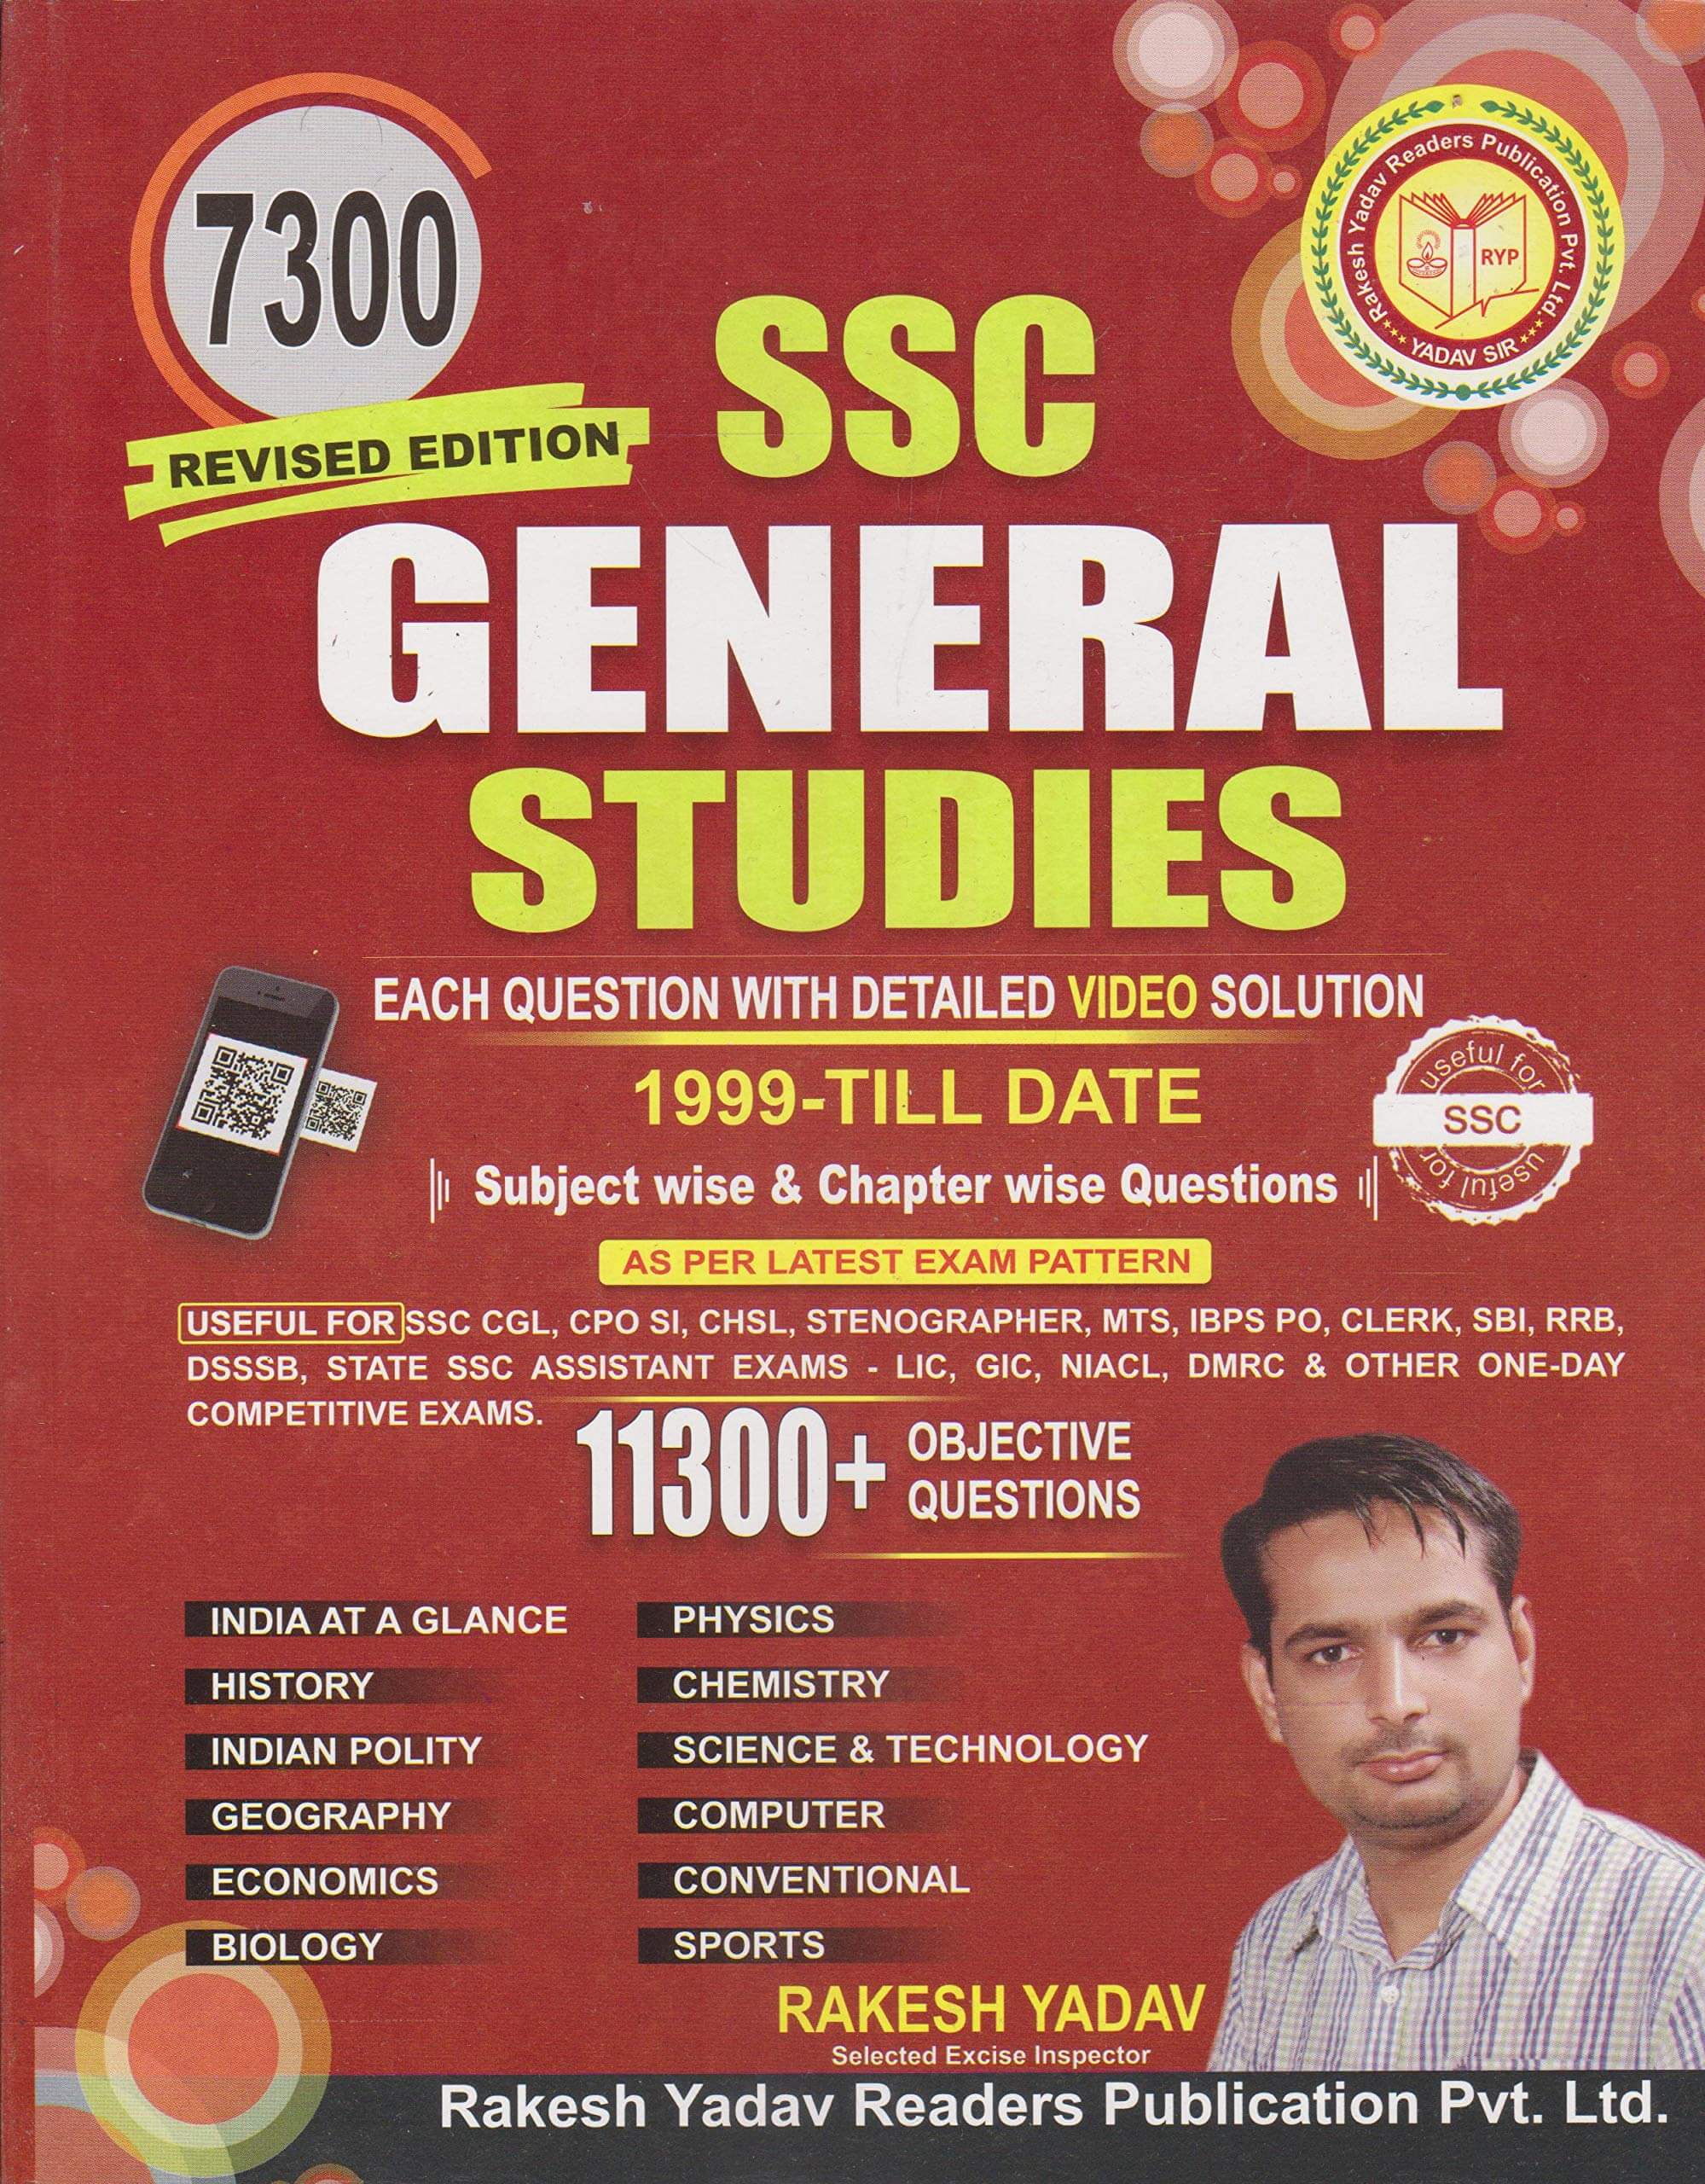 SSC GENERAL STUDIES 7300+